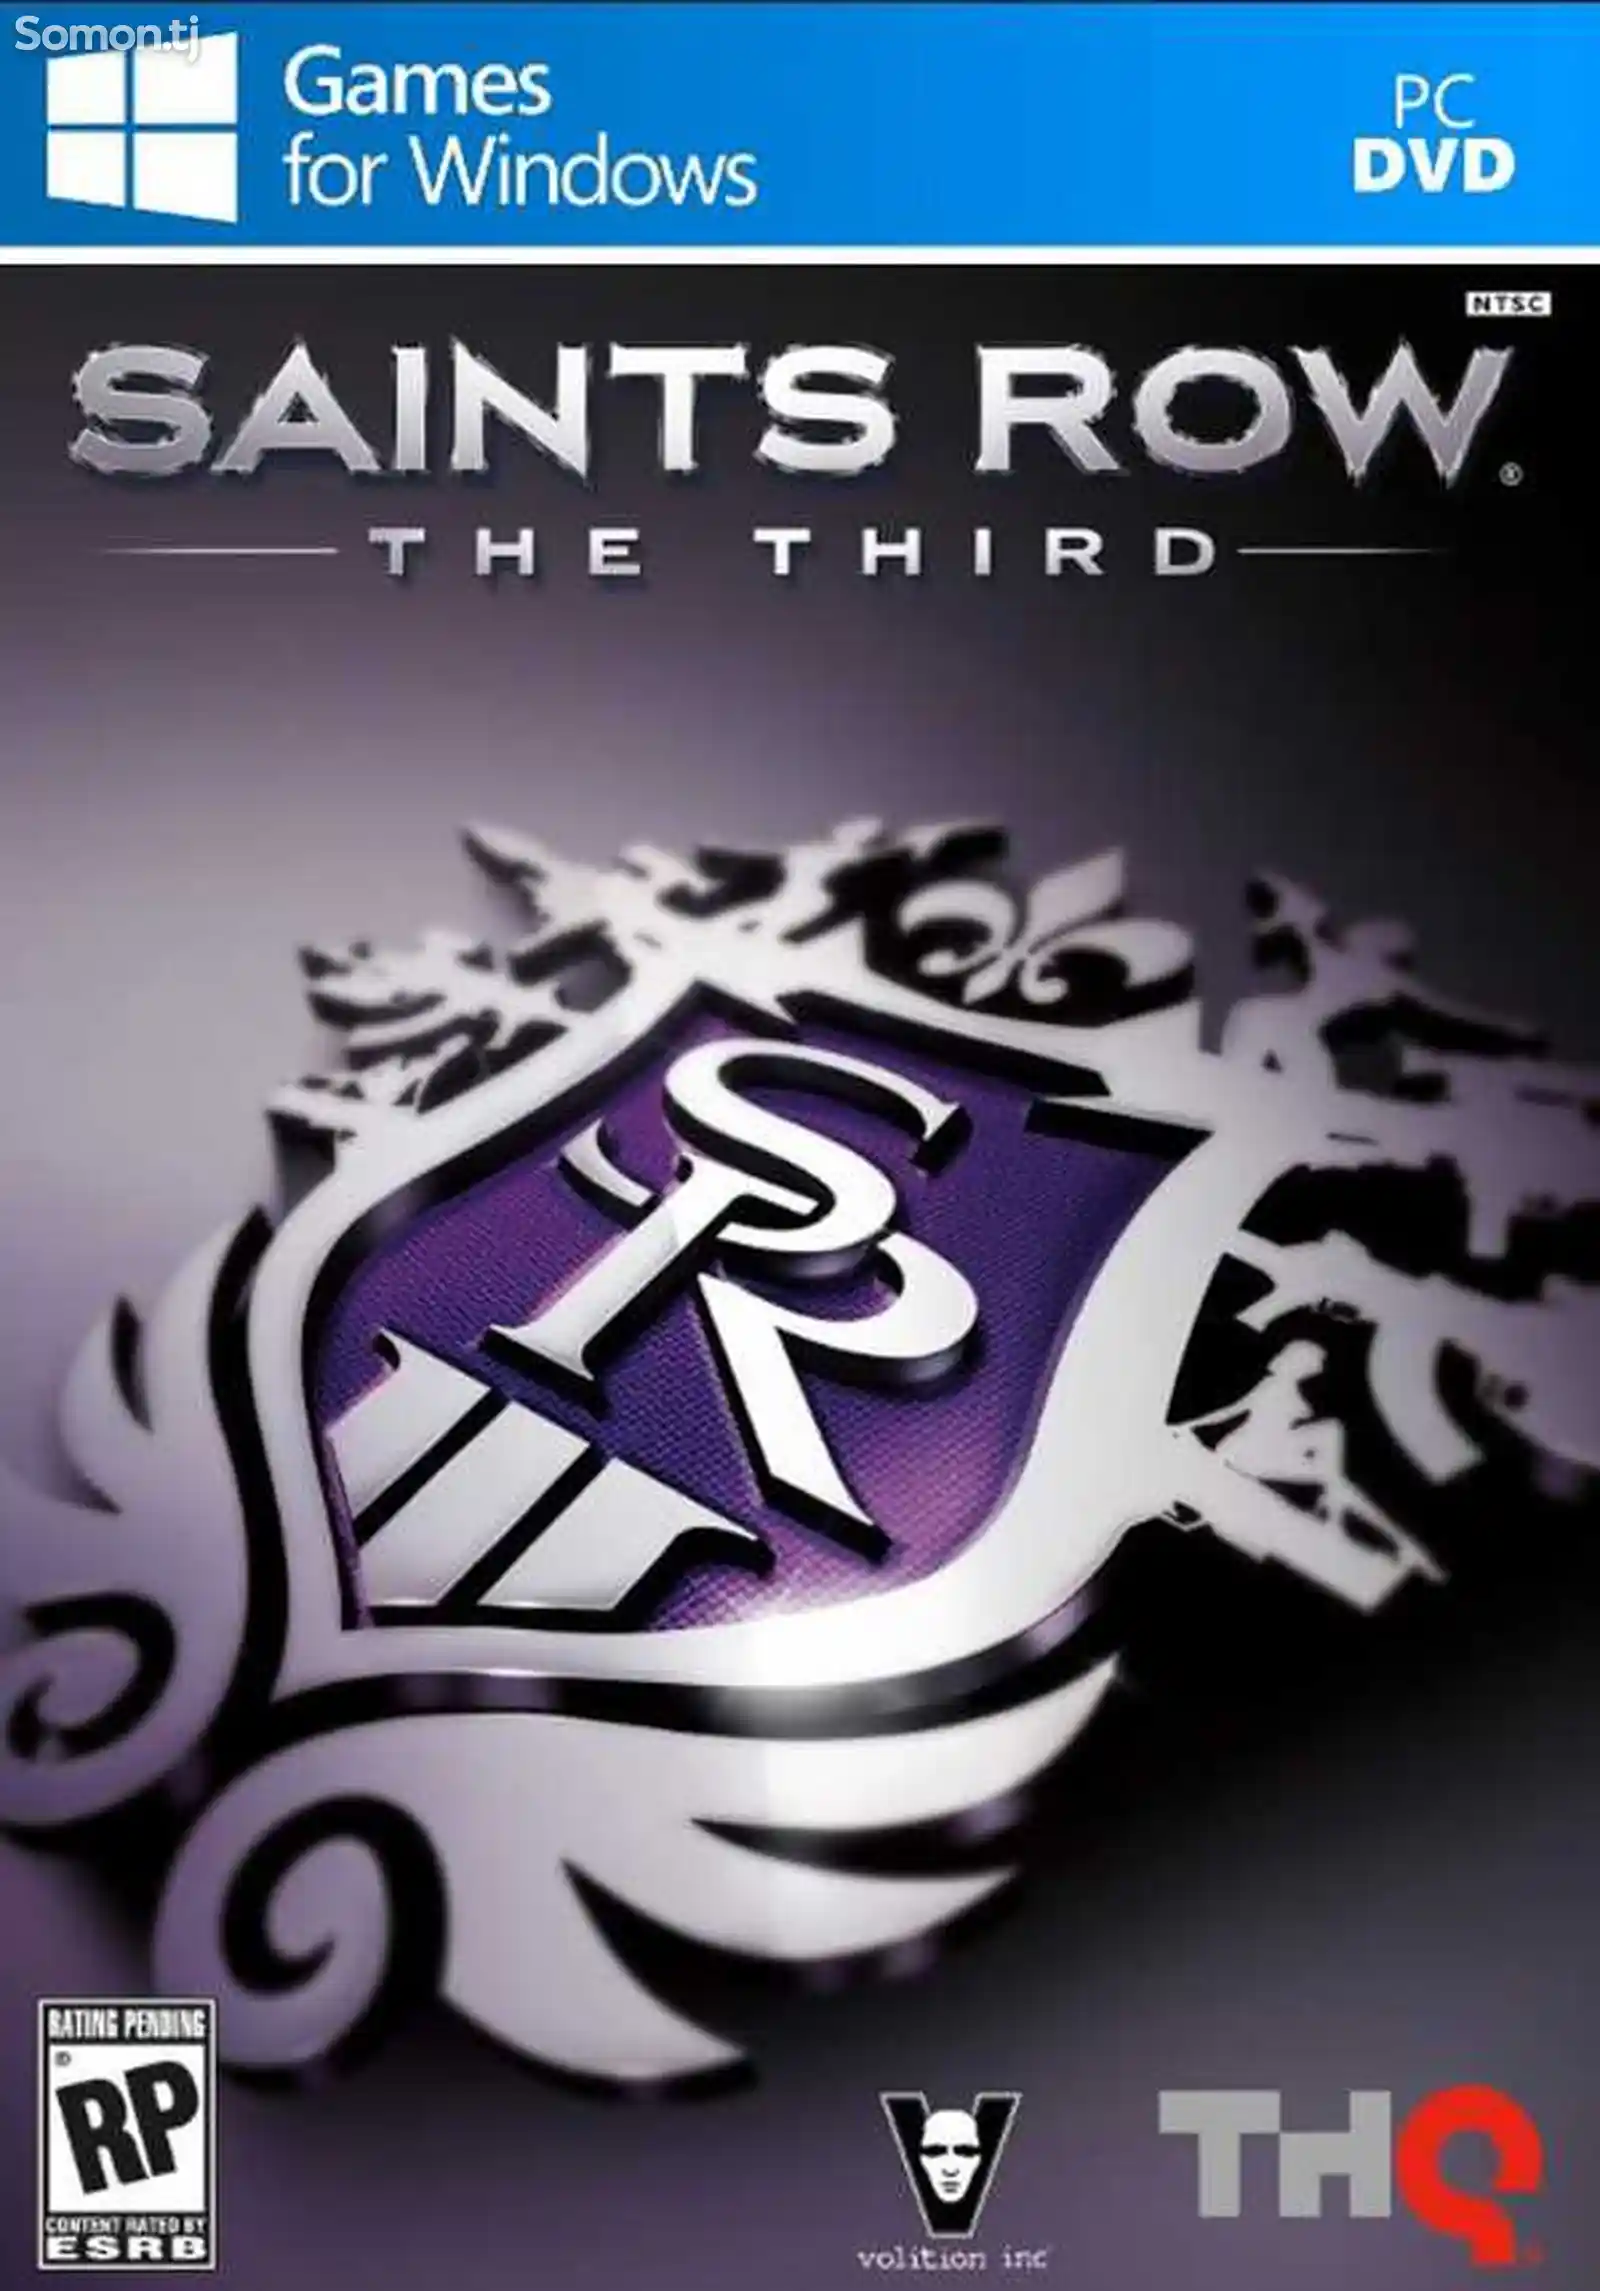 Игра Saints row the third для компьютера-пк-pc-1